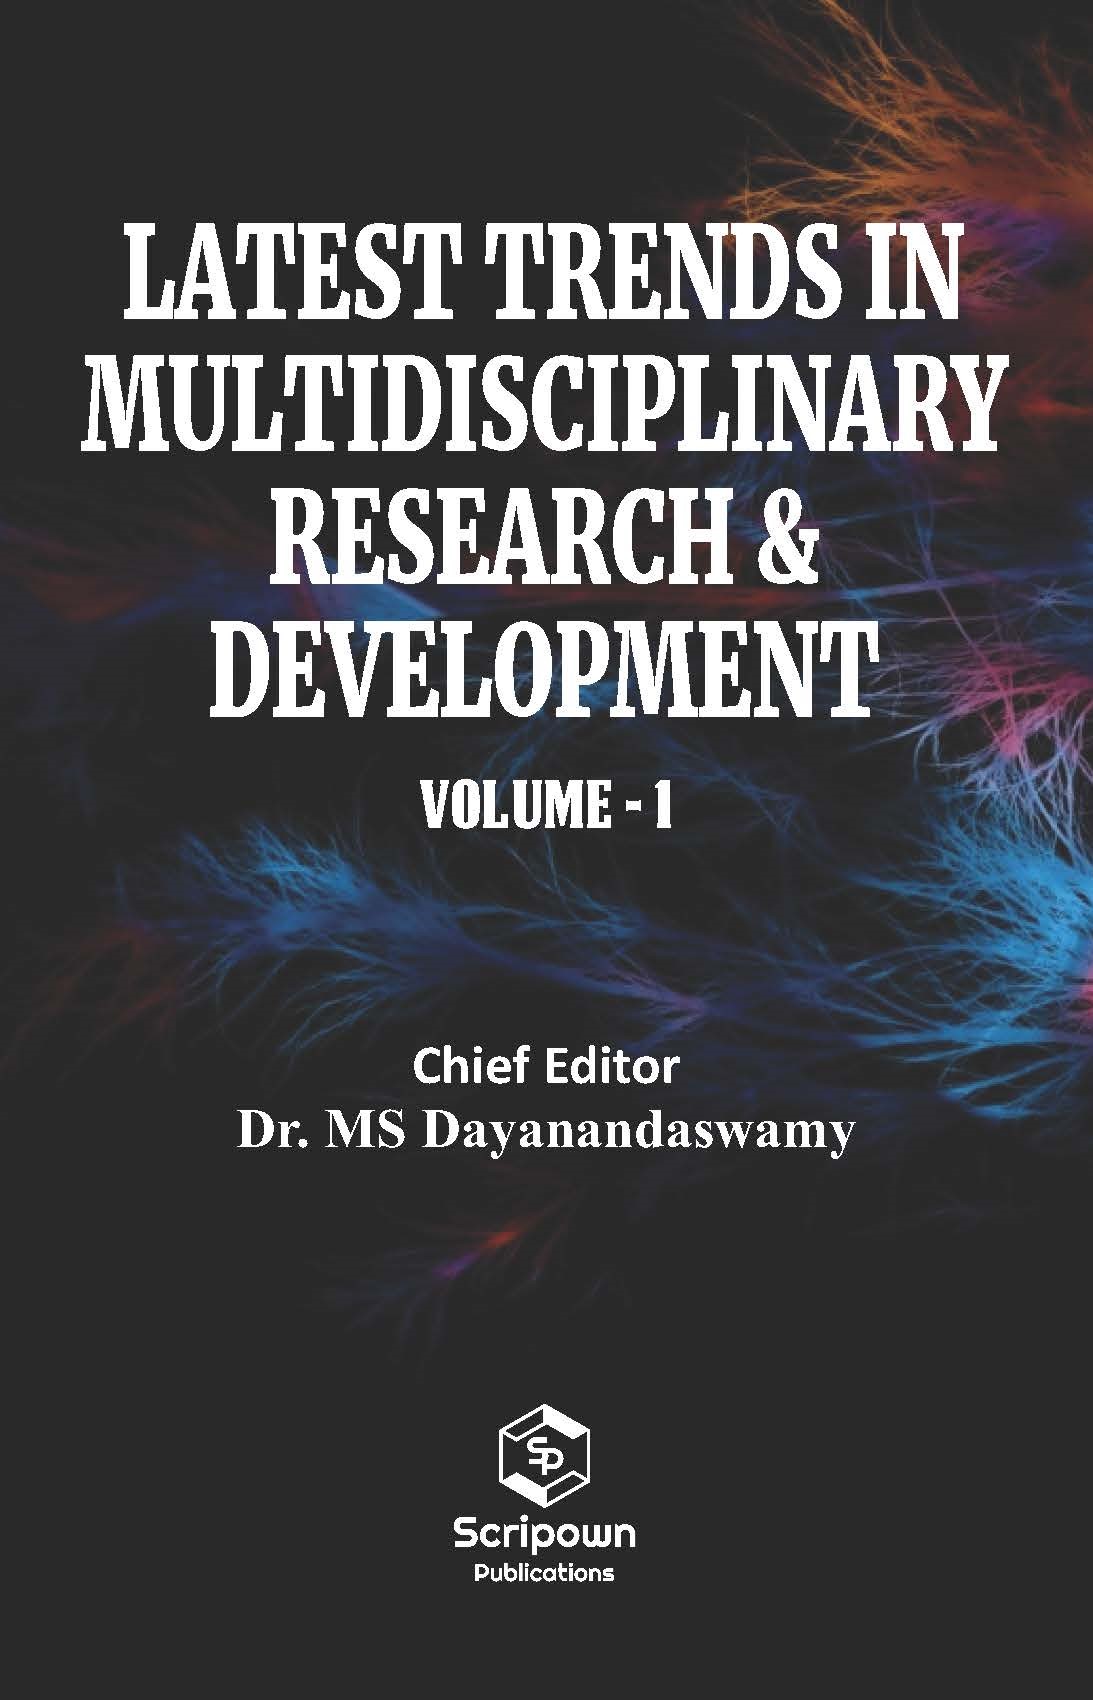 Latest Trends in Multidisciplinary Research & Development (Volume - 1)